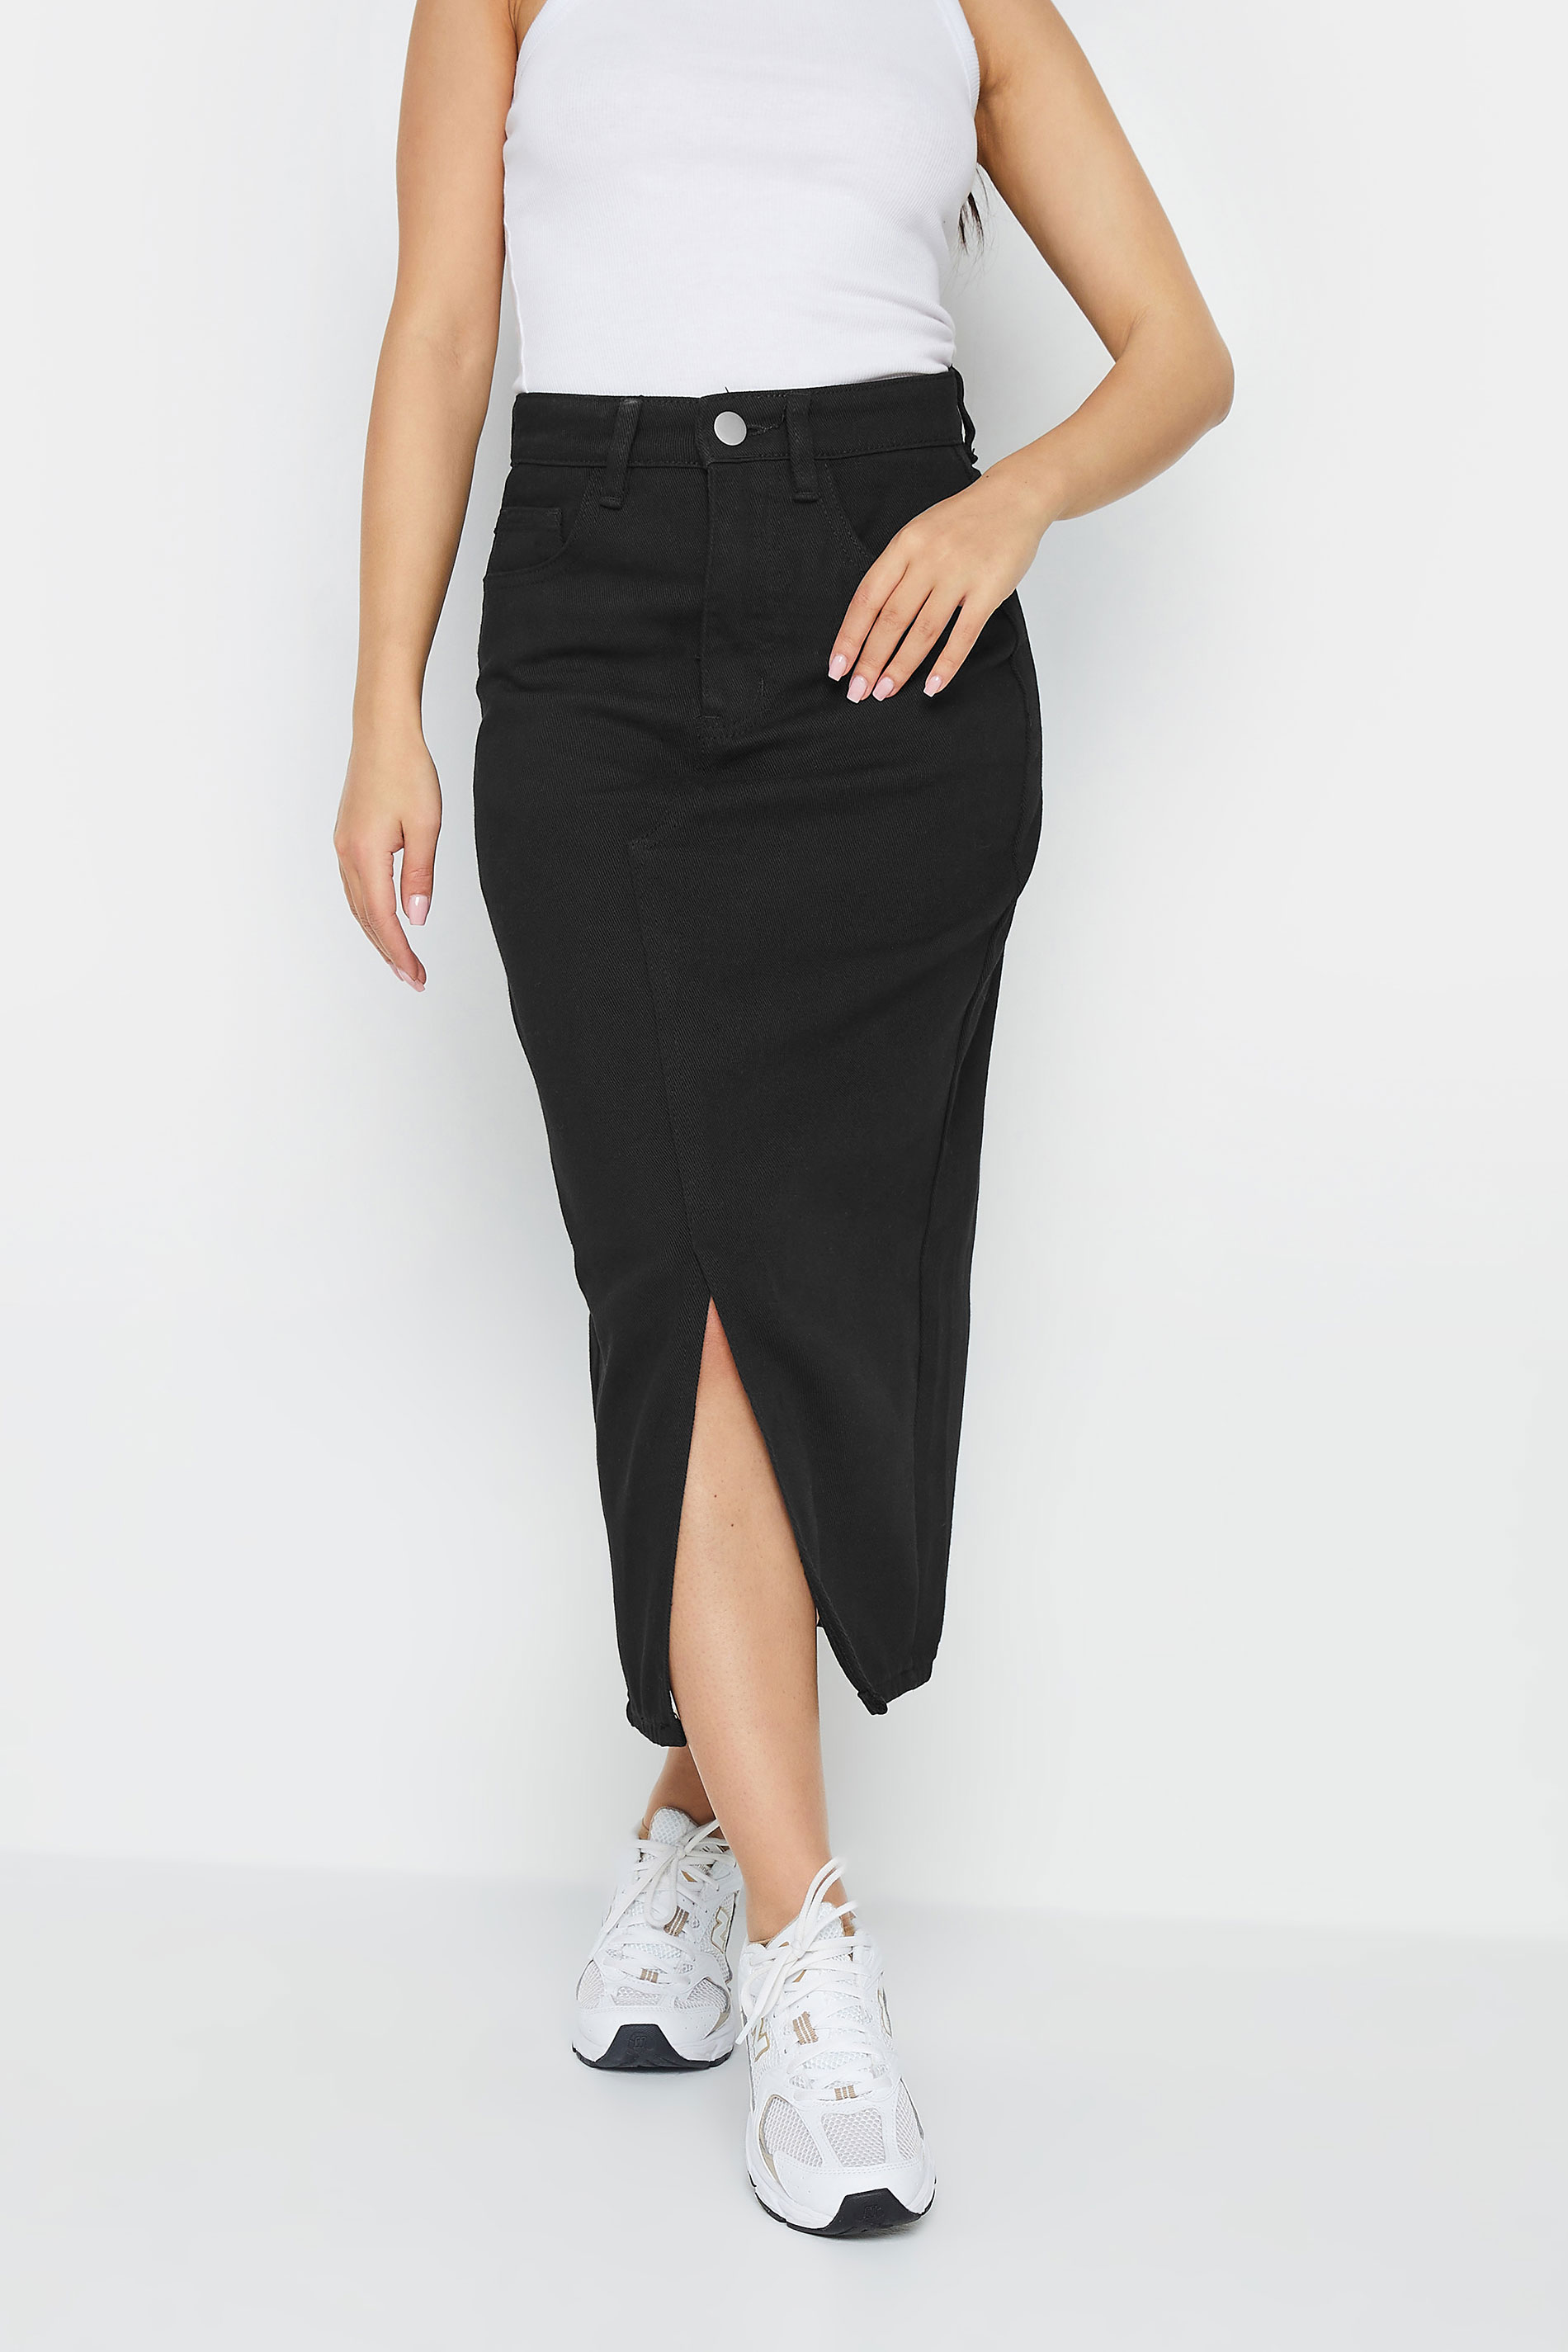 PixieGirl Black Denim Split Midi Skirt | PixieGirl  2